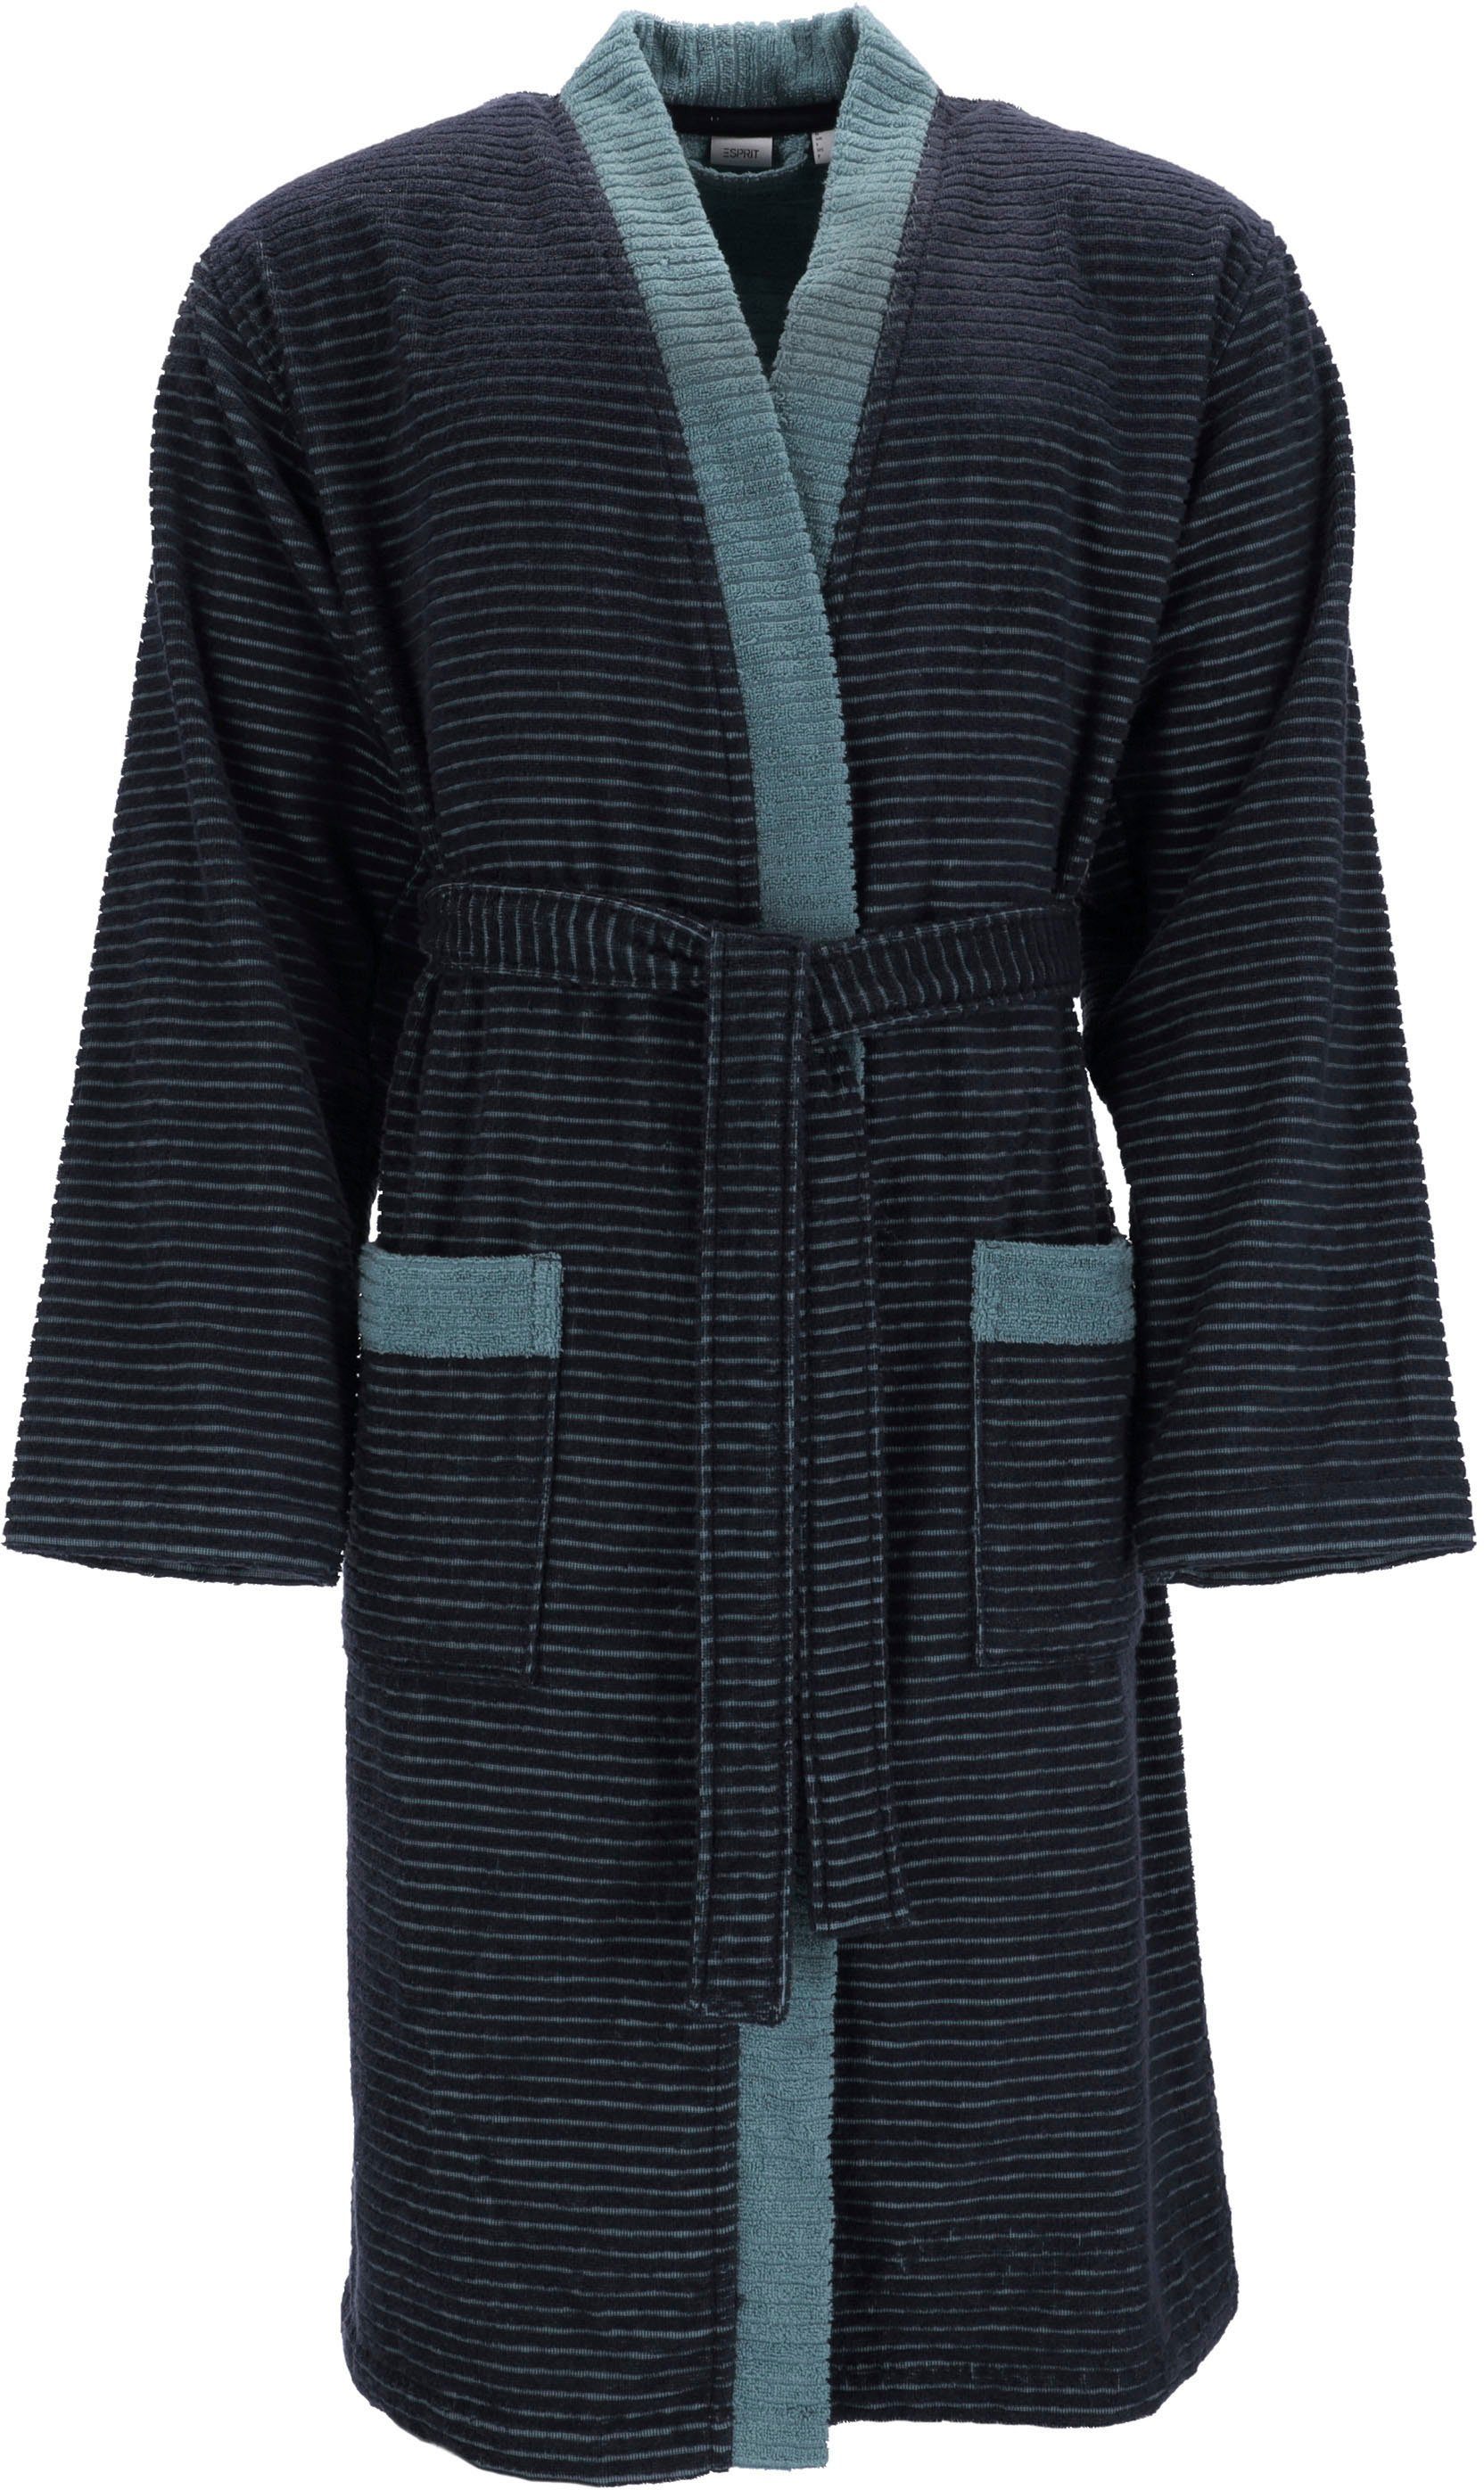 Kimonomantel navy Stripe, Gürtel, Doubleface Double Esprit Langform, Webfrottier, Herrenbademantel blue Kimono-Kragen,